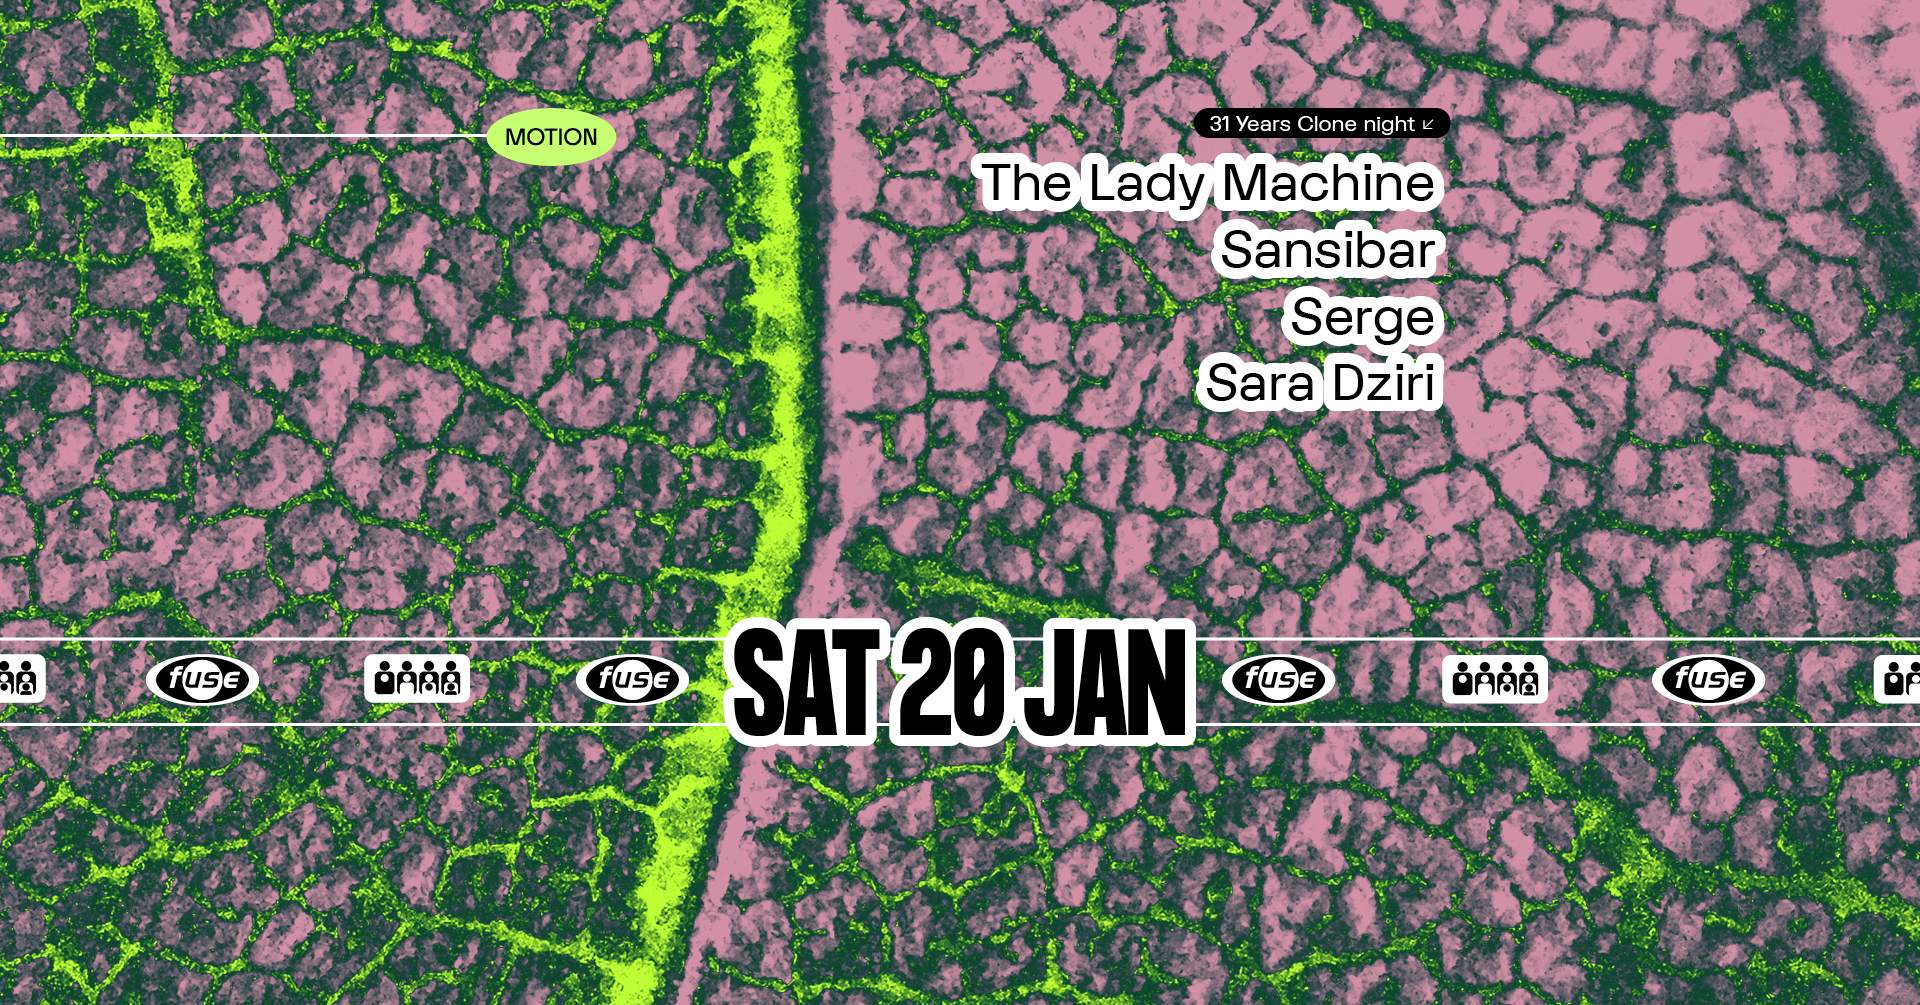 Fuse presents: 31 Years Clone night with The Lady Machine, Sansibar & Serge - フライヤー表